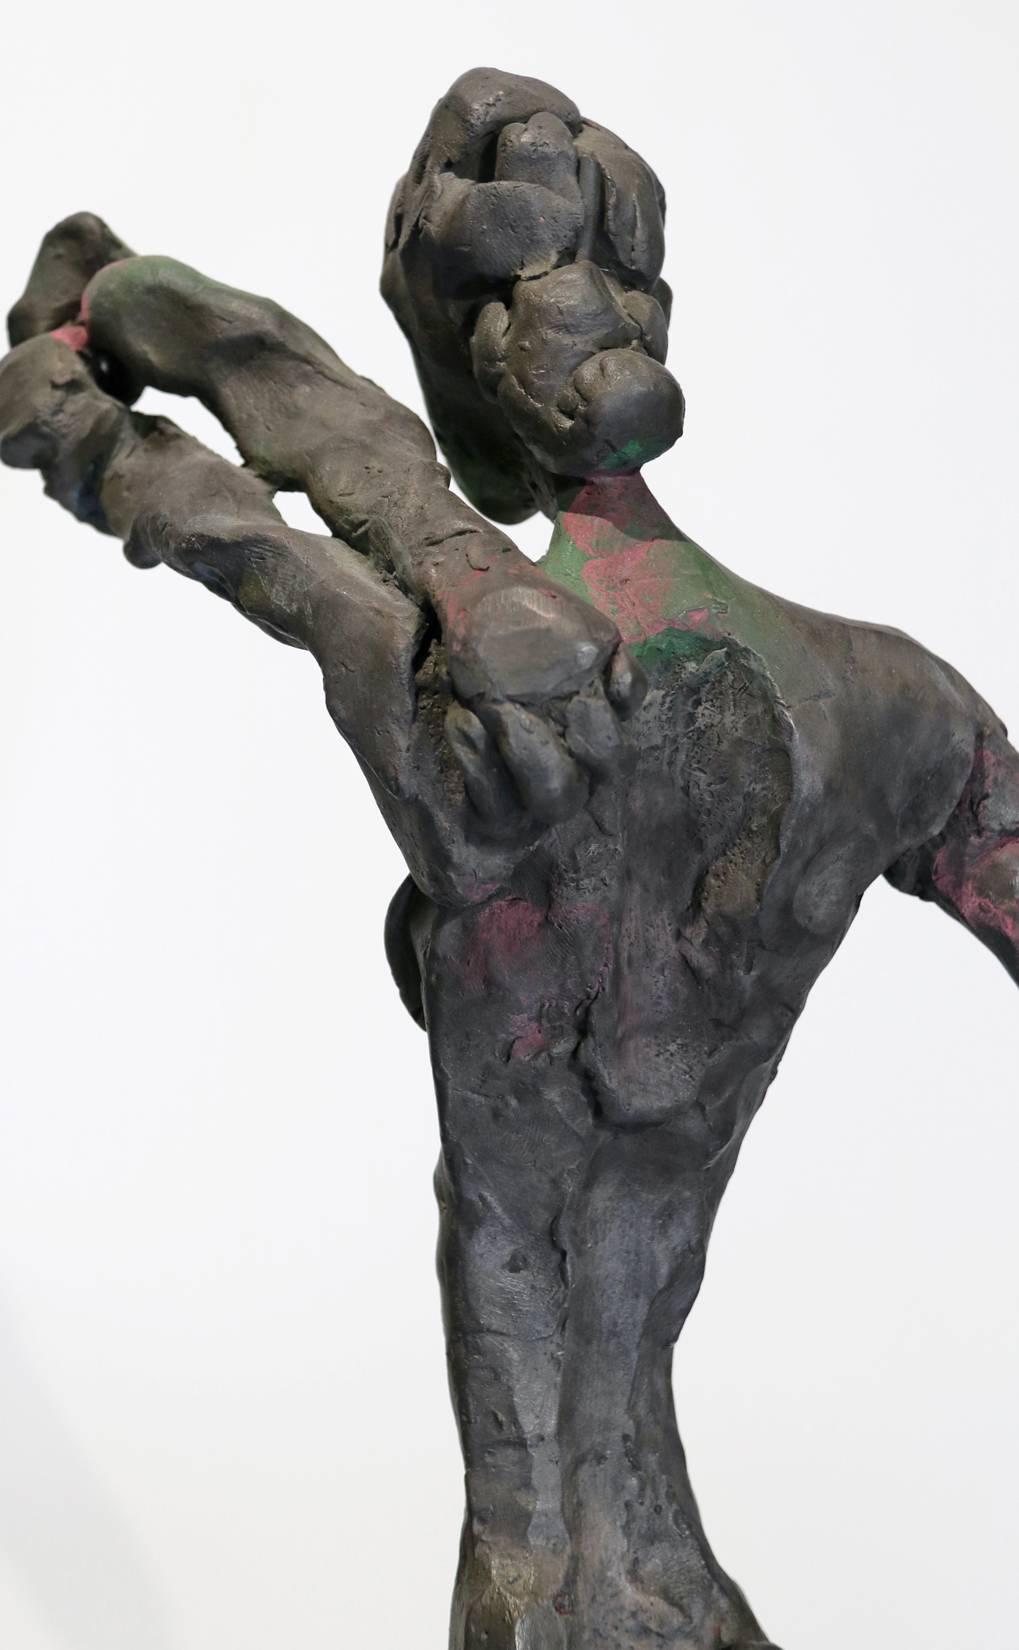 This expressive bronze figure 